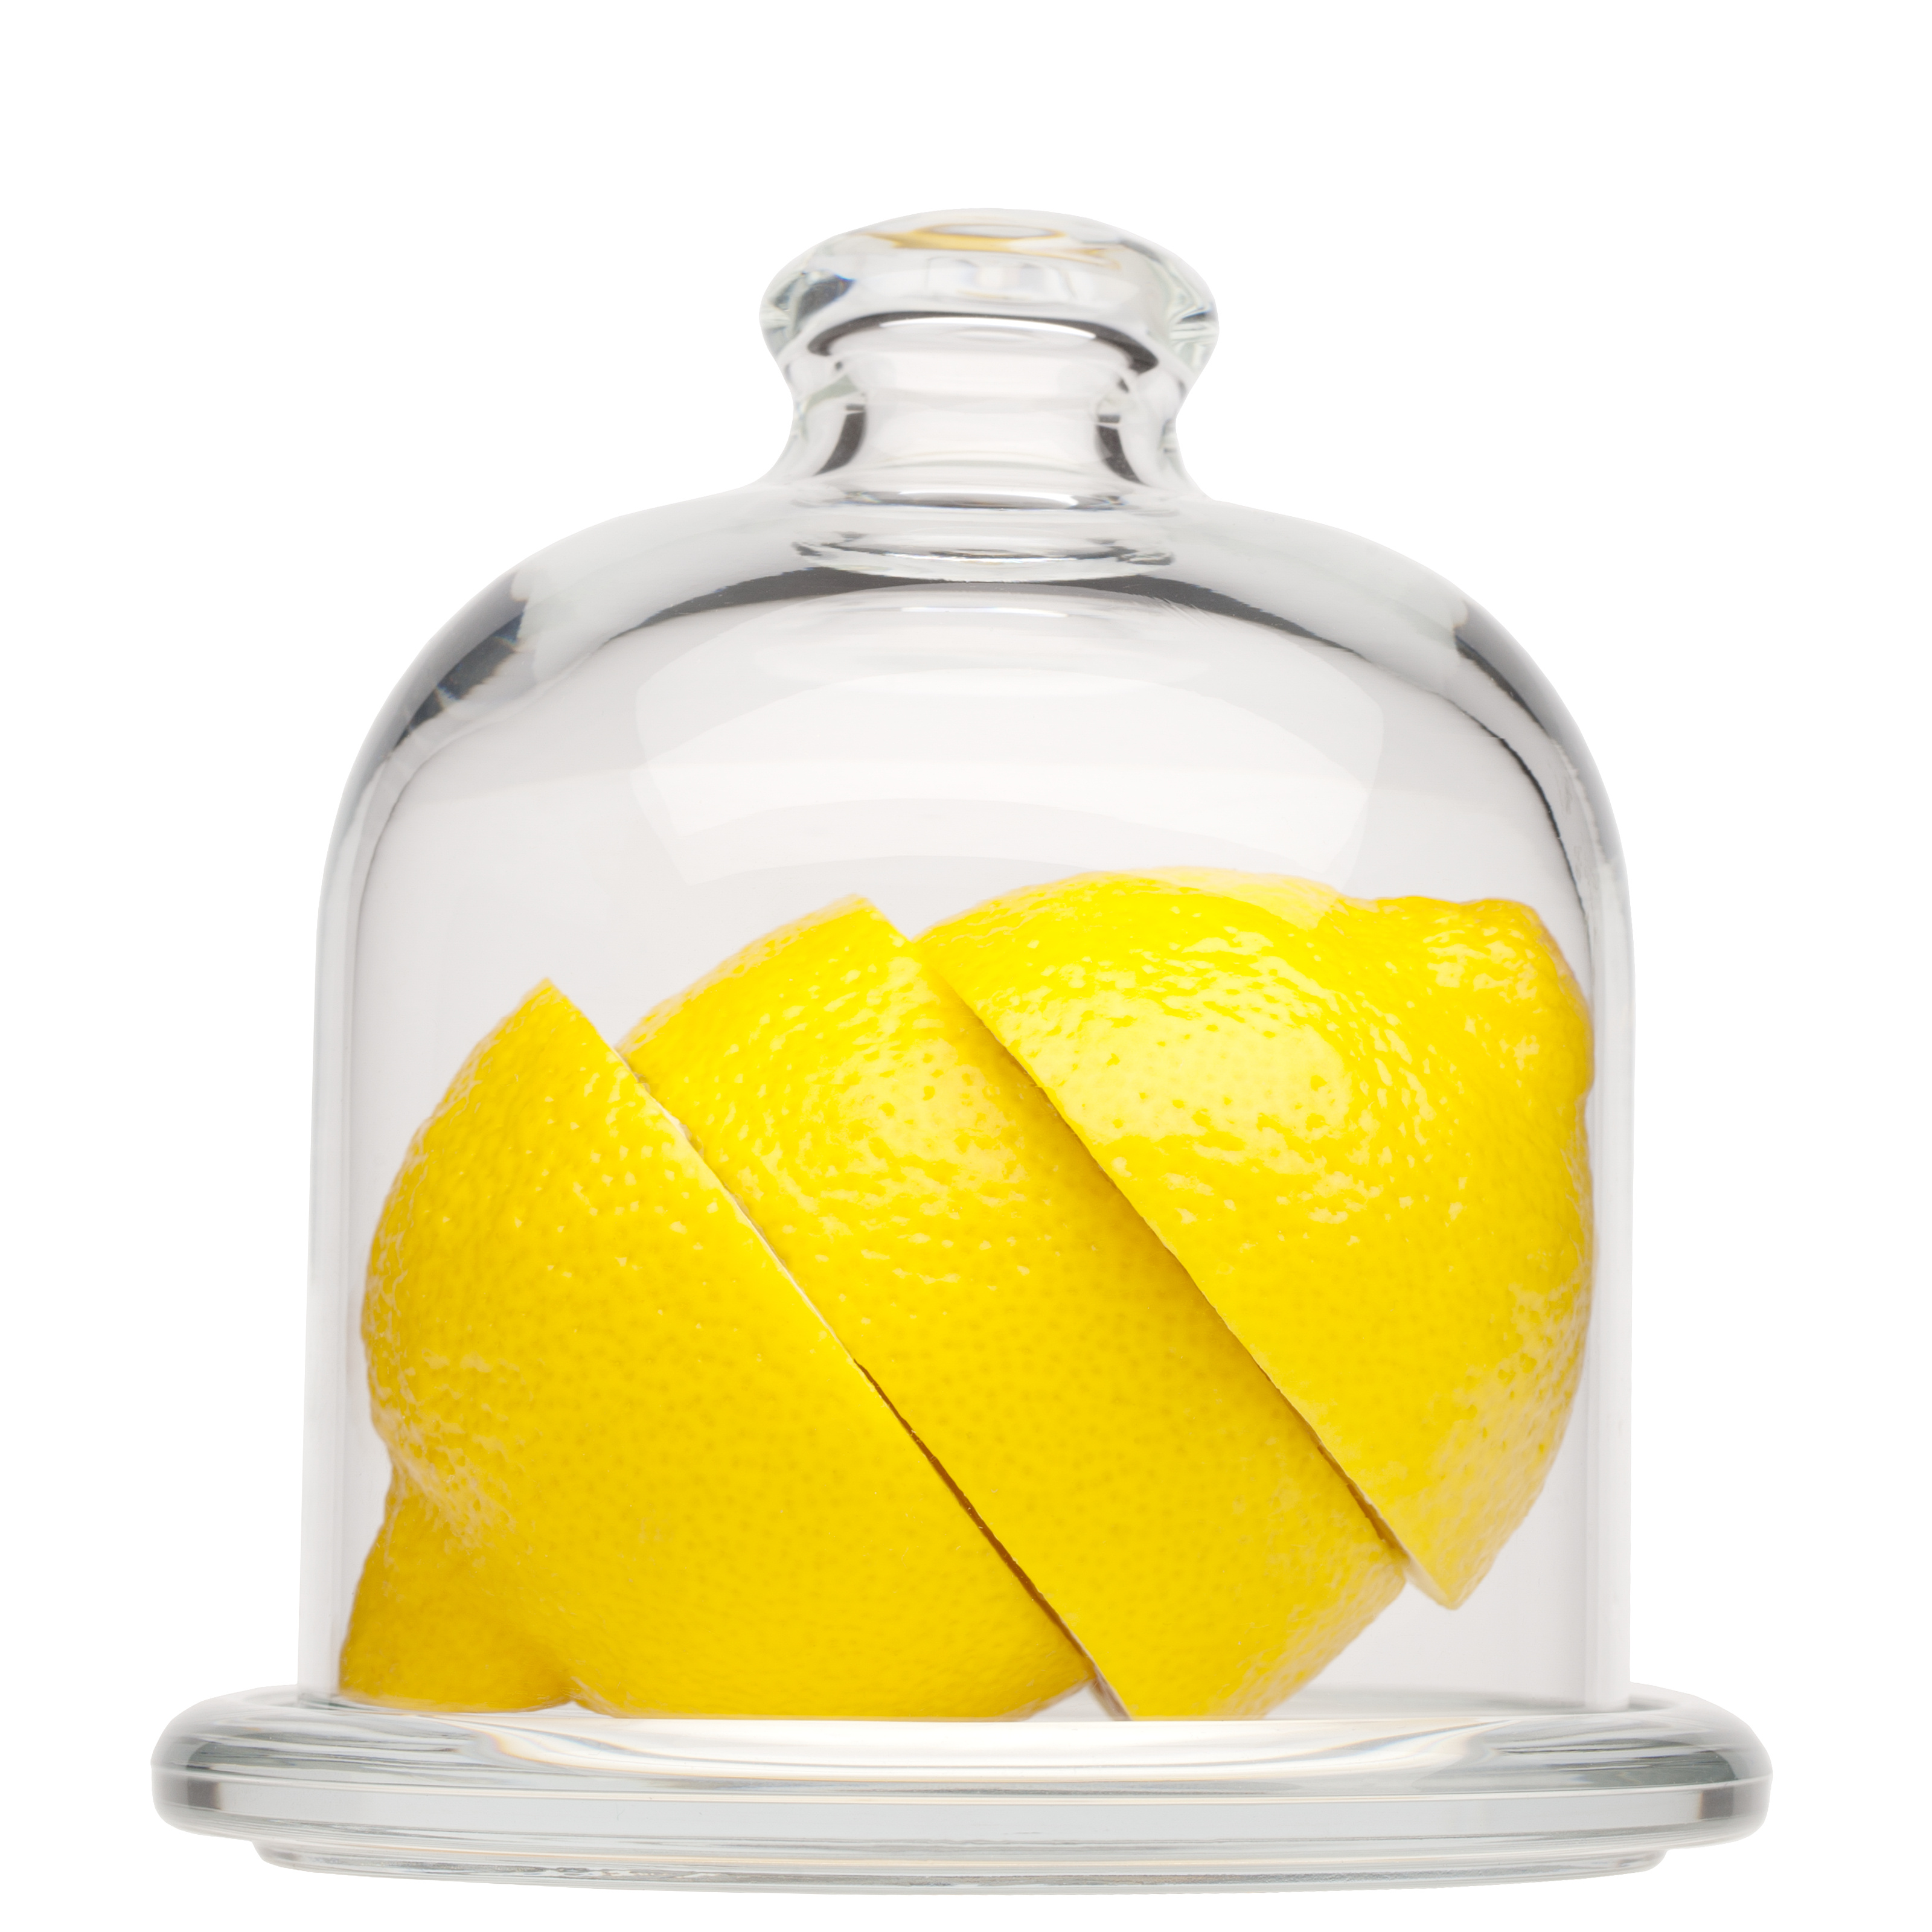 Fresh lemon in a glass dome